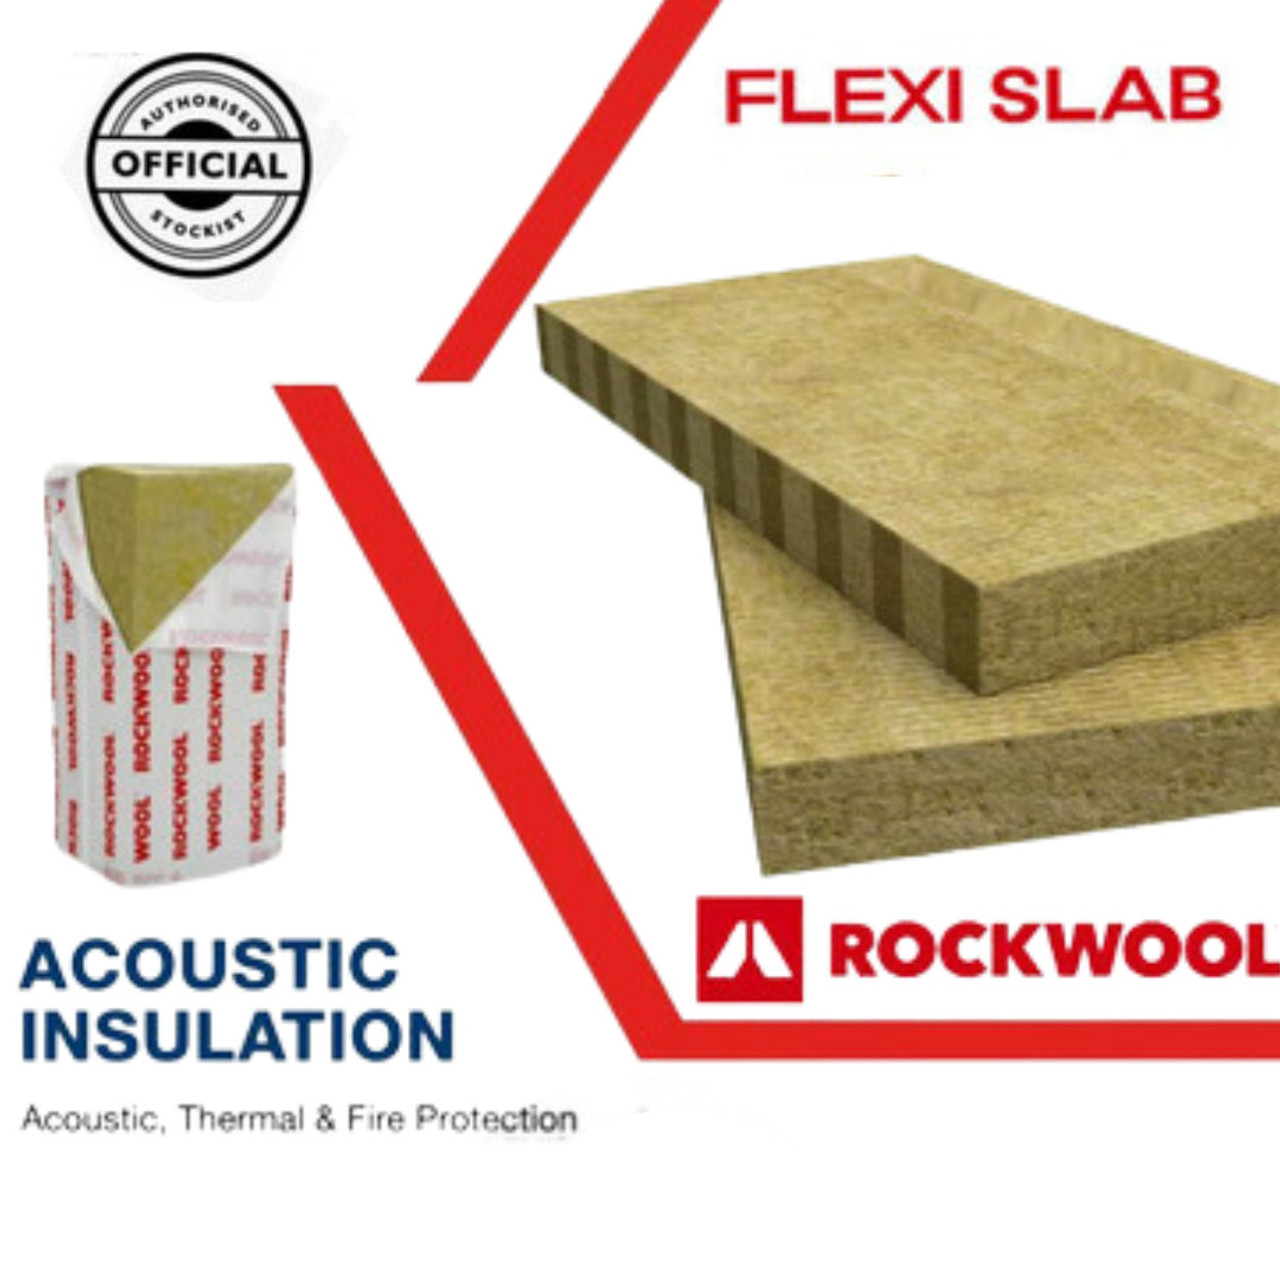 140mm- Rockwool Flexi Slab Acoustic Insulation 1200mm x 600mm x 140mm- 2.88m2 Pack  10014968 RKW-50269